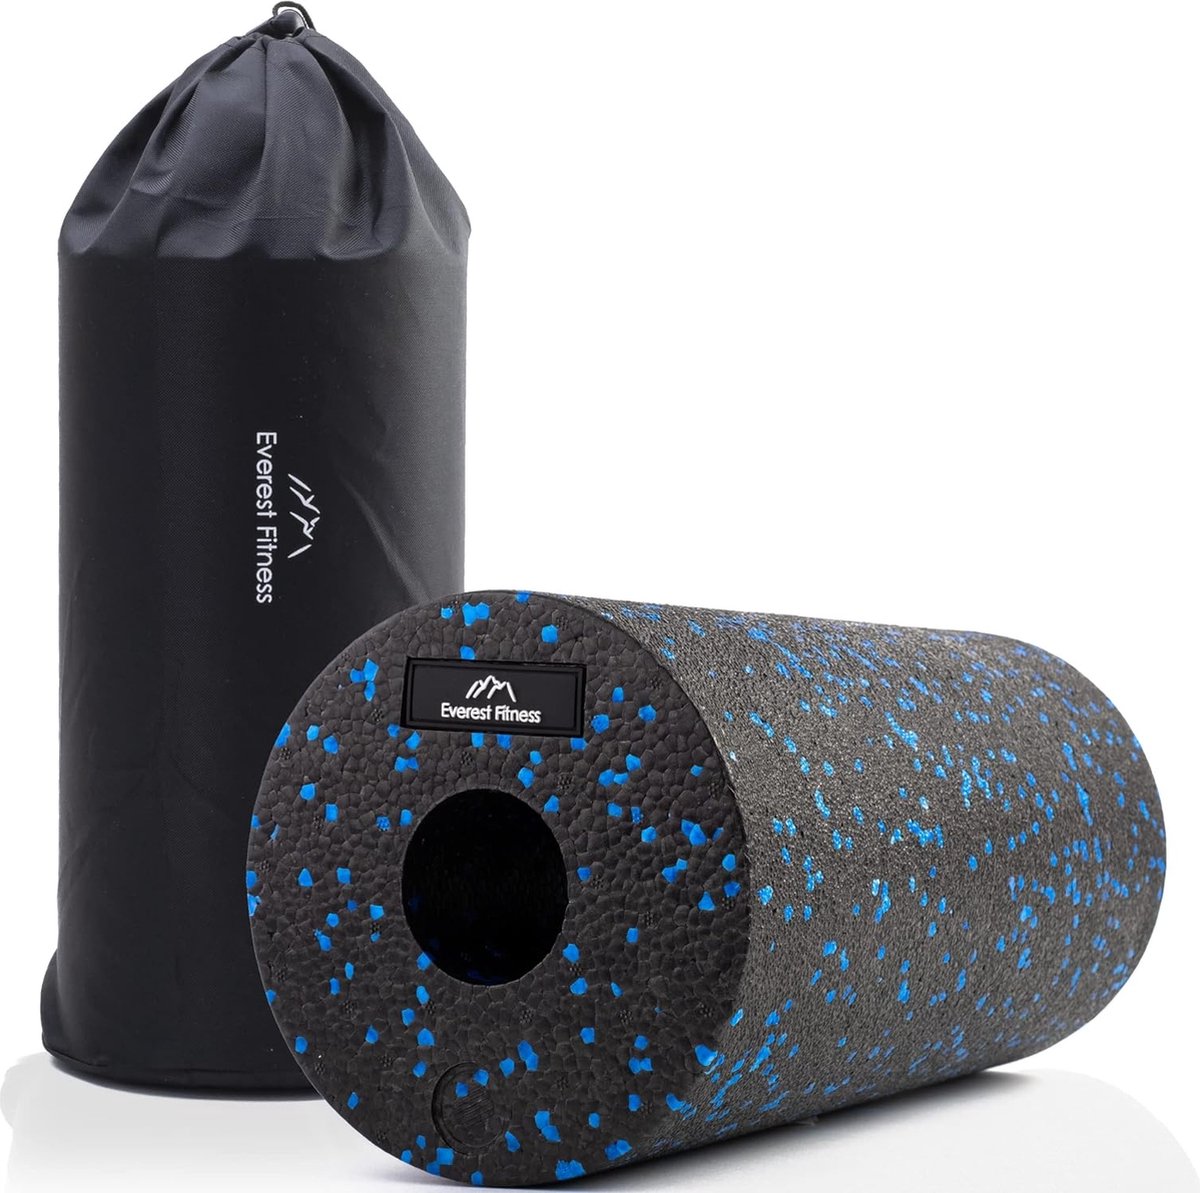 Fasciarol 30 cm medium hard in zwart/blauw incl. boekje - Professionele fasciarol voor rug en wervelkolom - Foam Roller - Massage Roller - Fitness Roll - Yoga Massage Roller met Everest Fitness